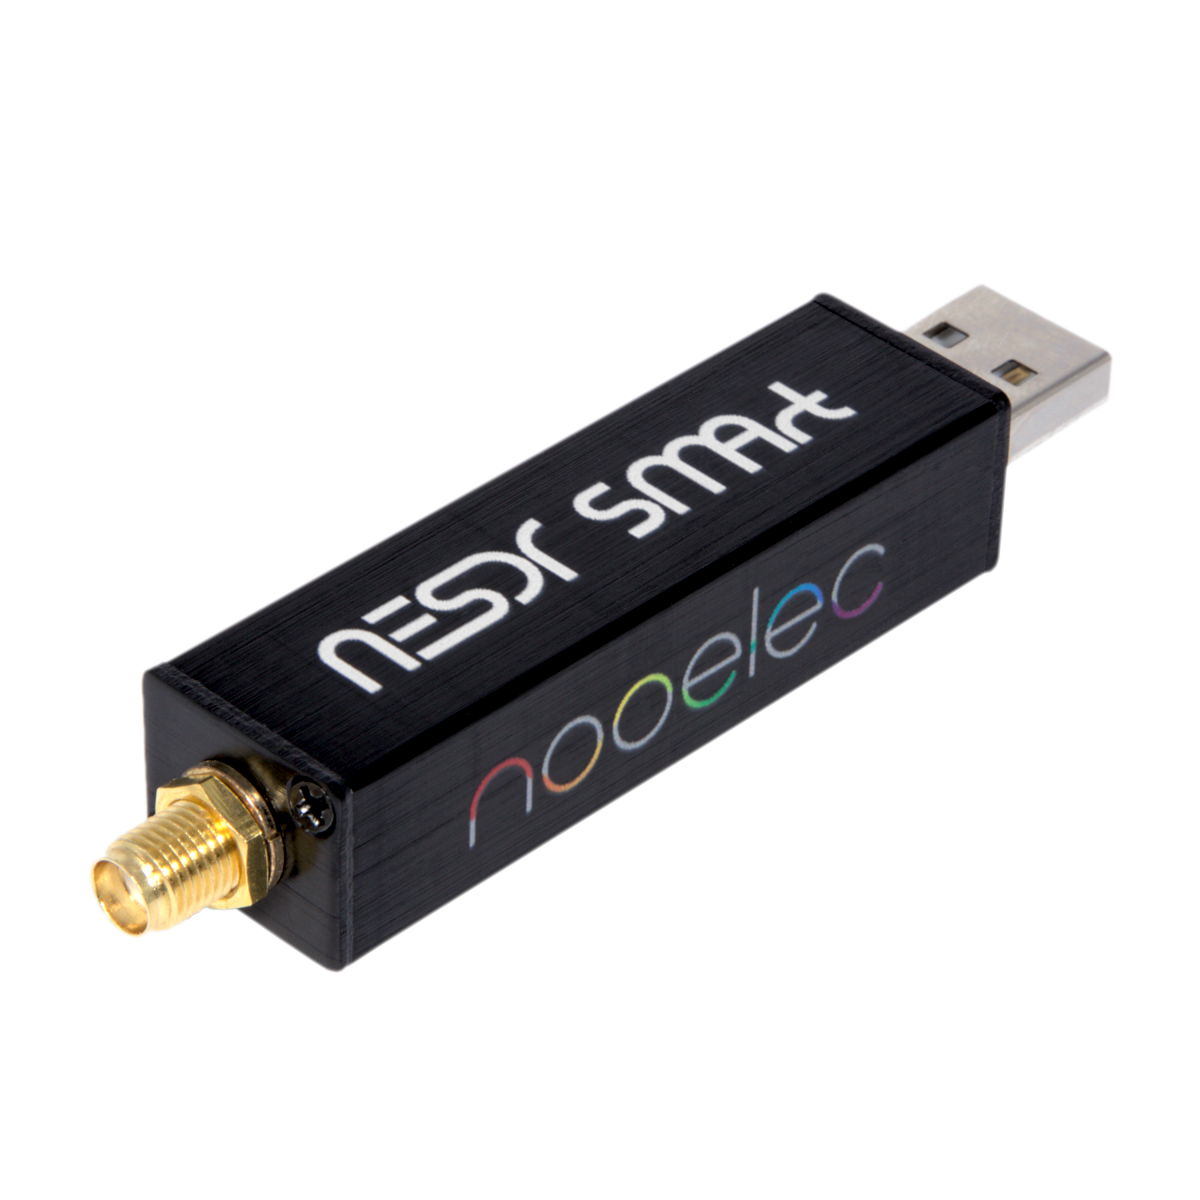 RTL-SDR, DVB-T USB Stick for SDR Reception